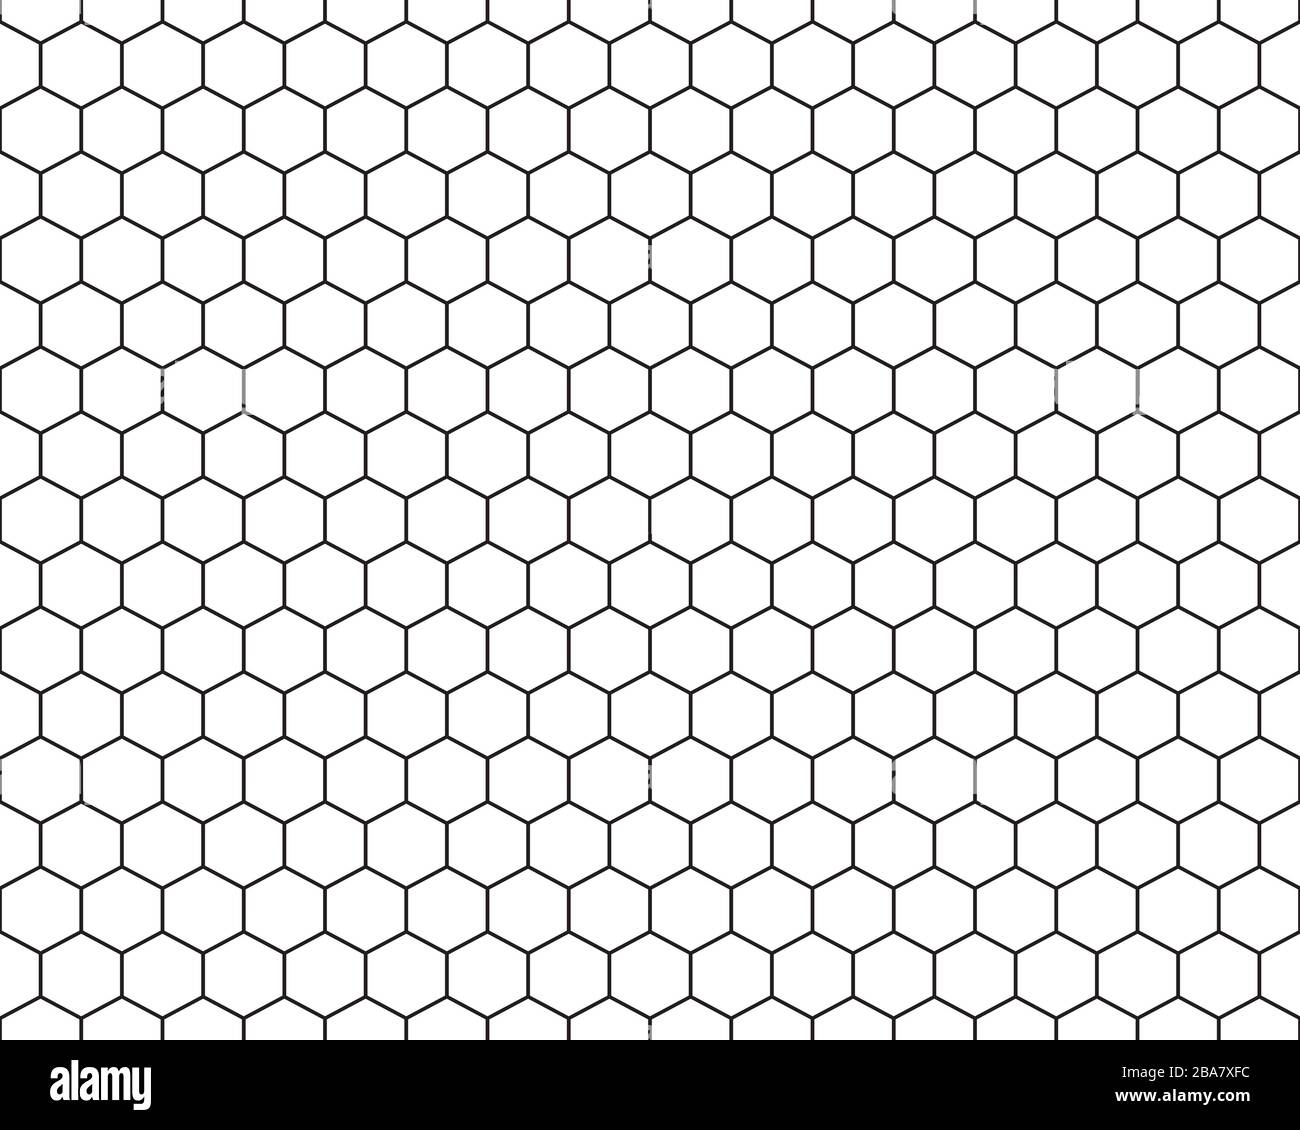 Seamless hexagon pattern background, creative design templates Stock Photo